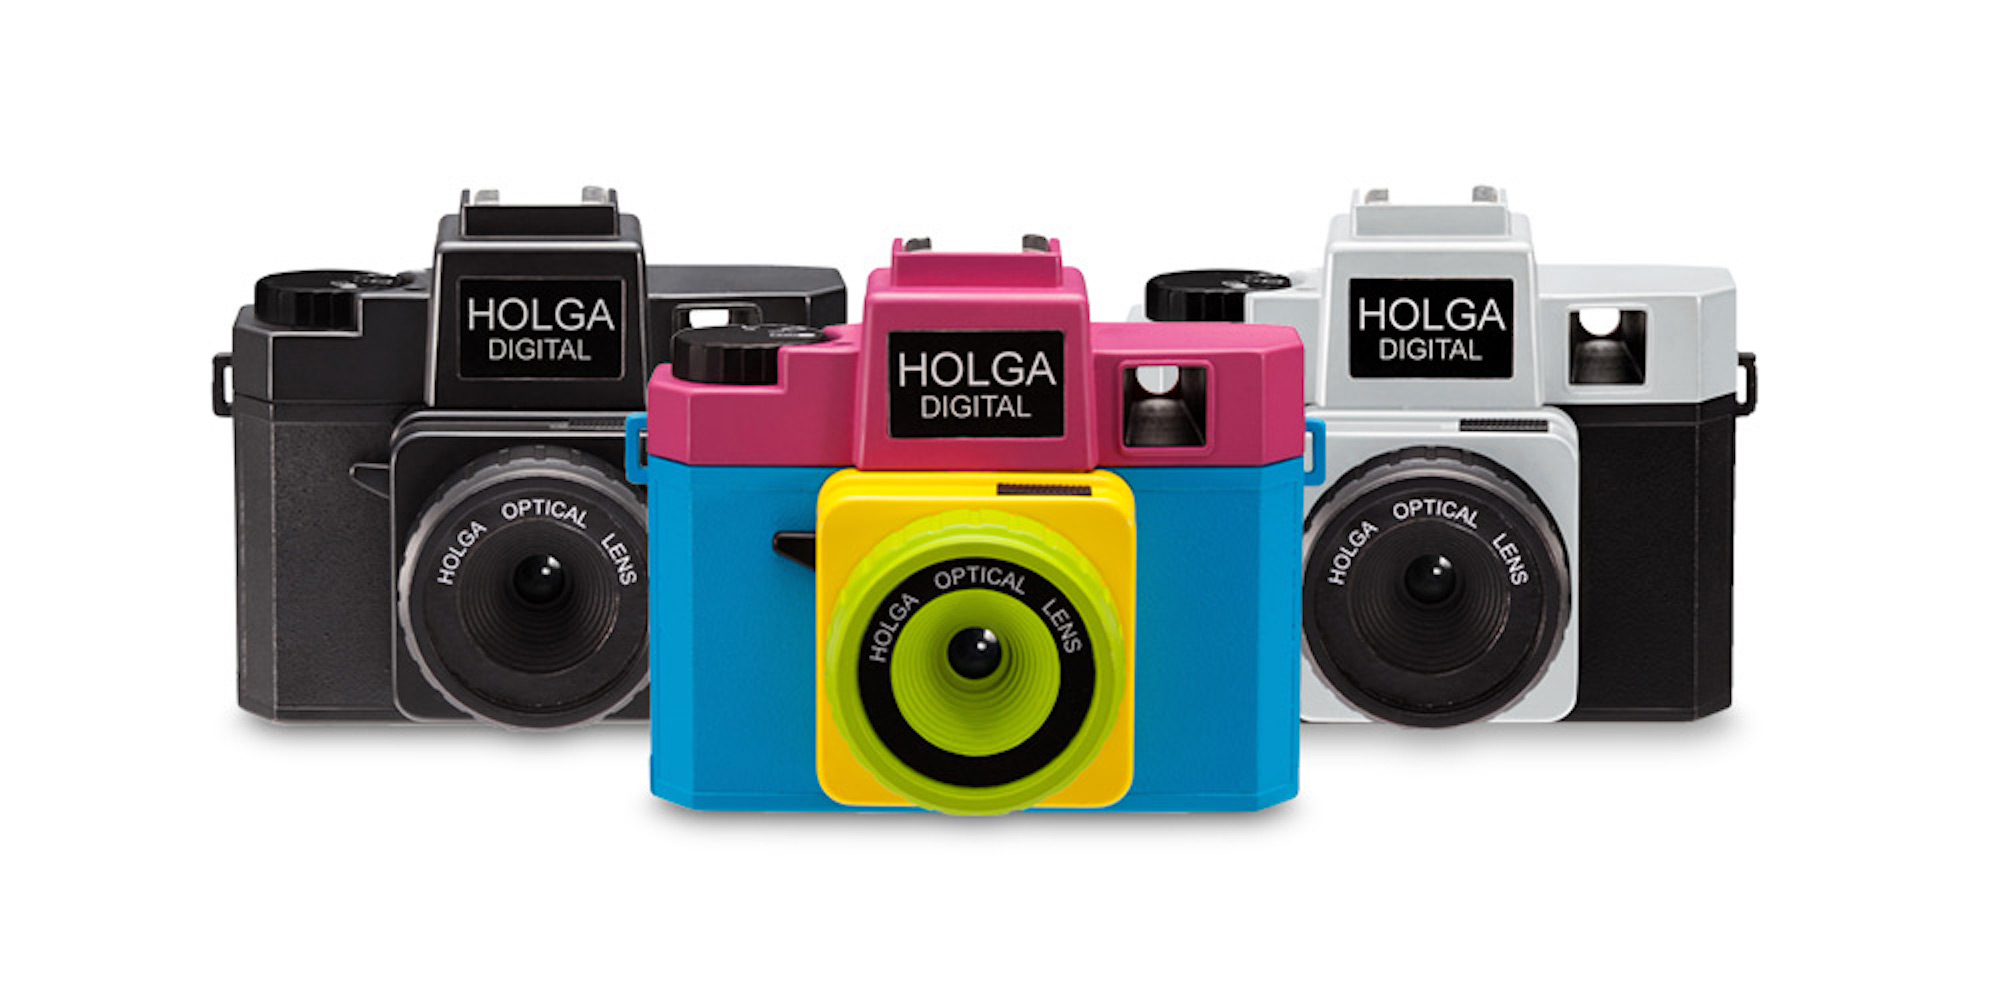 Take retro snaps with this pocket-sized Holga Digital Camera, now 